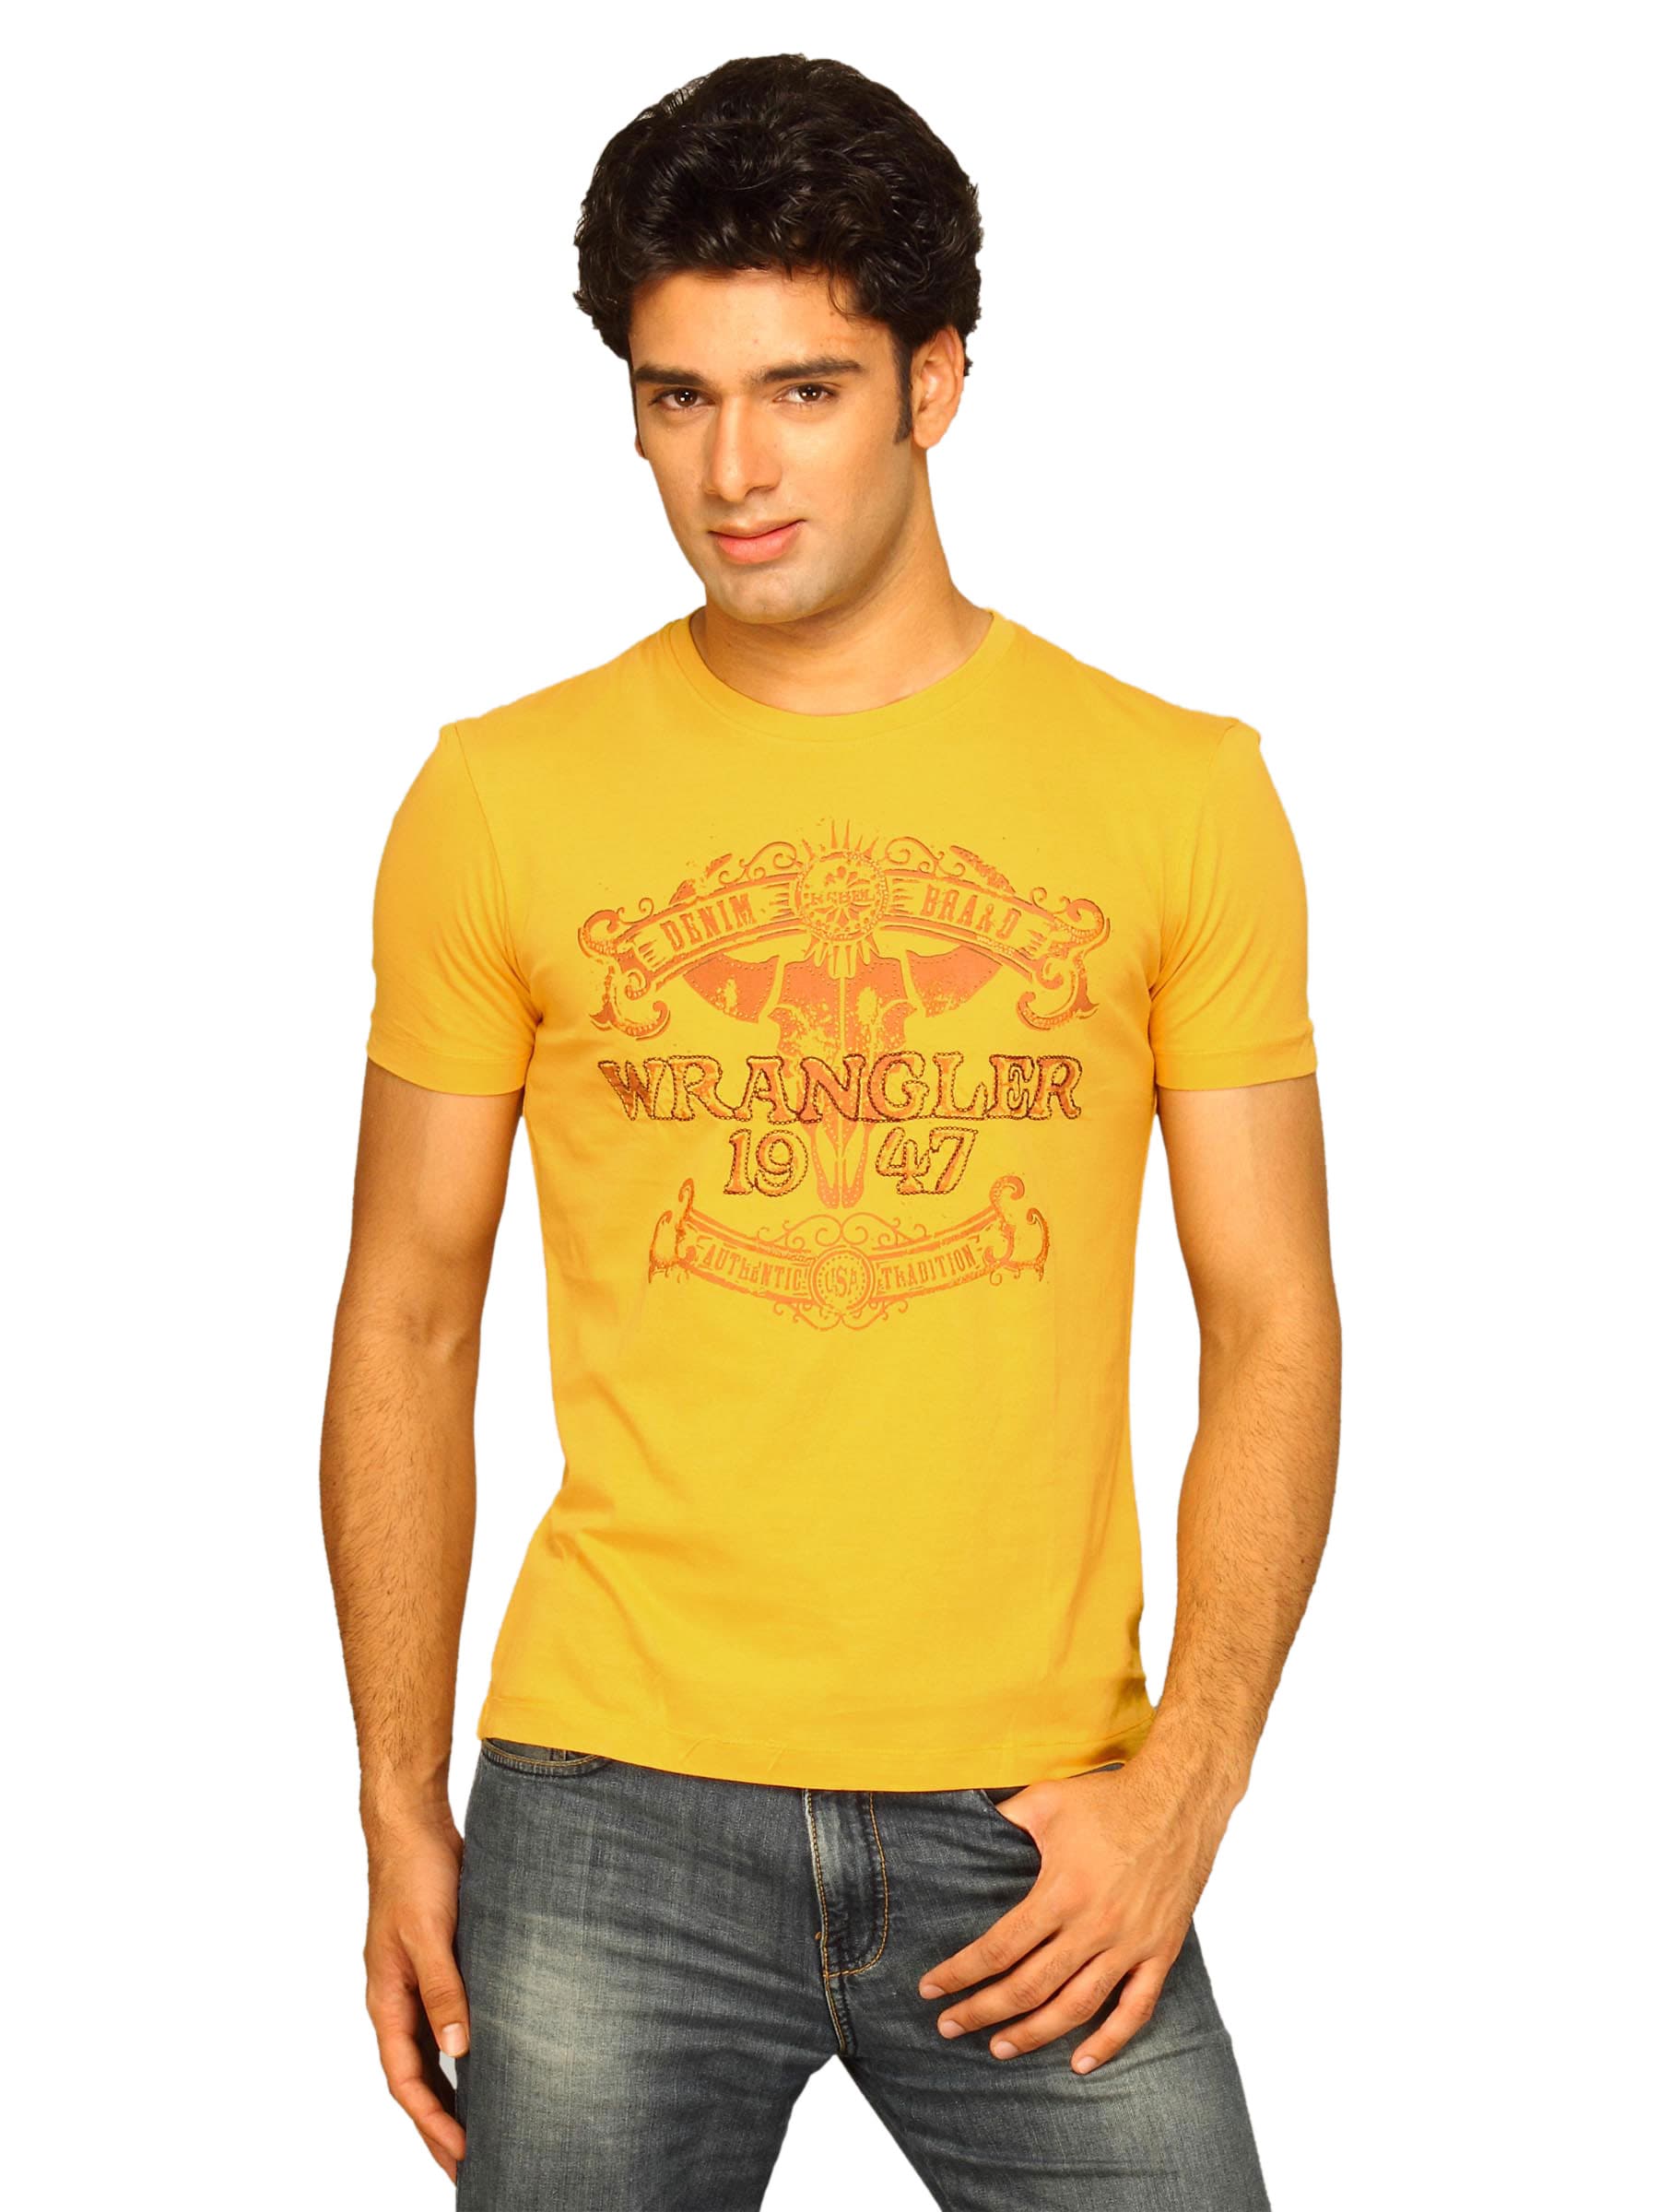 Wrangler Men's Authentic Embro Orange T-shirt